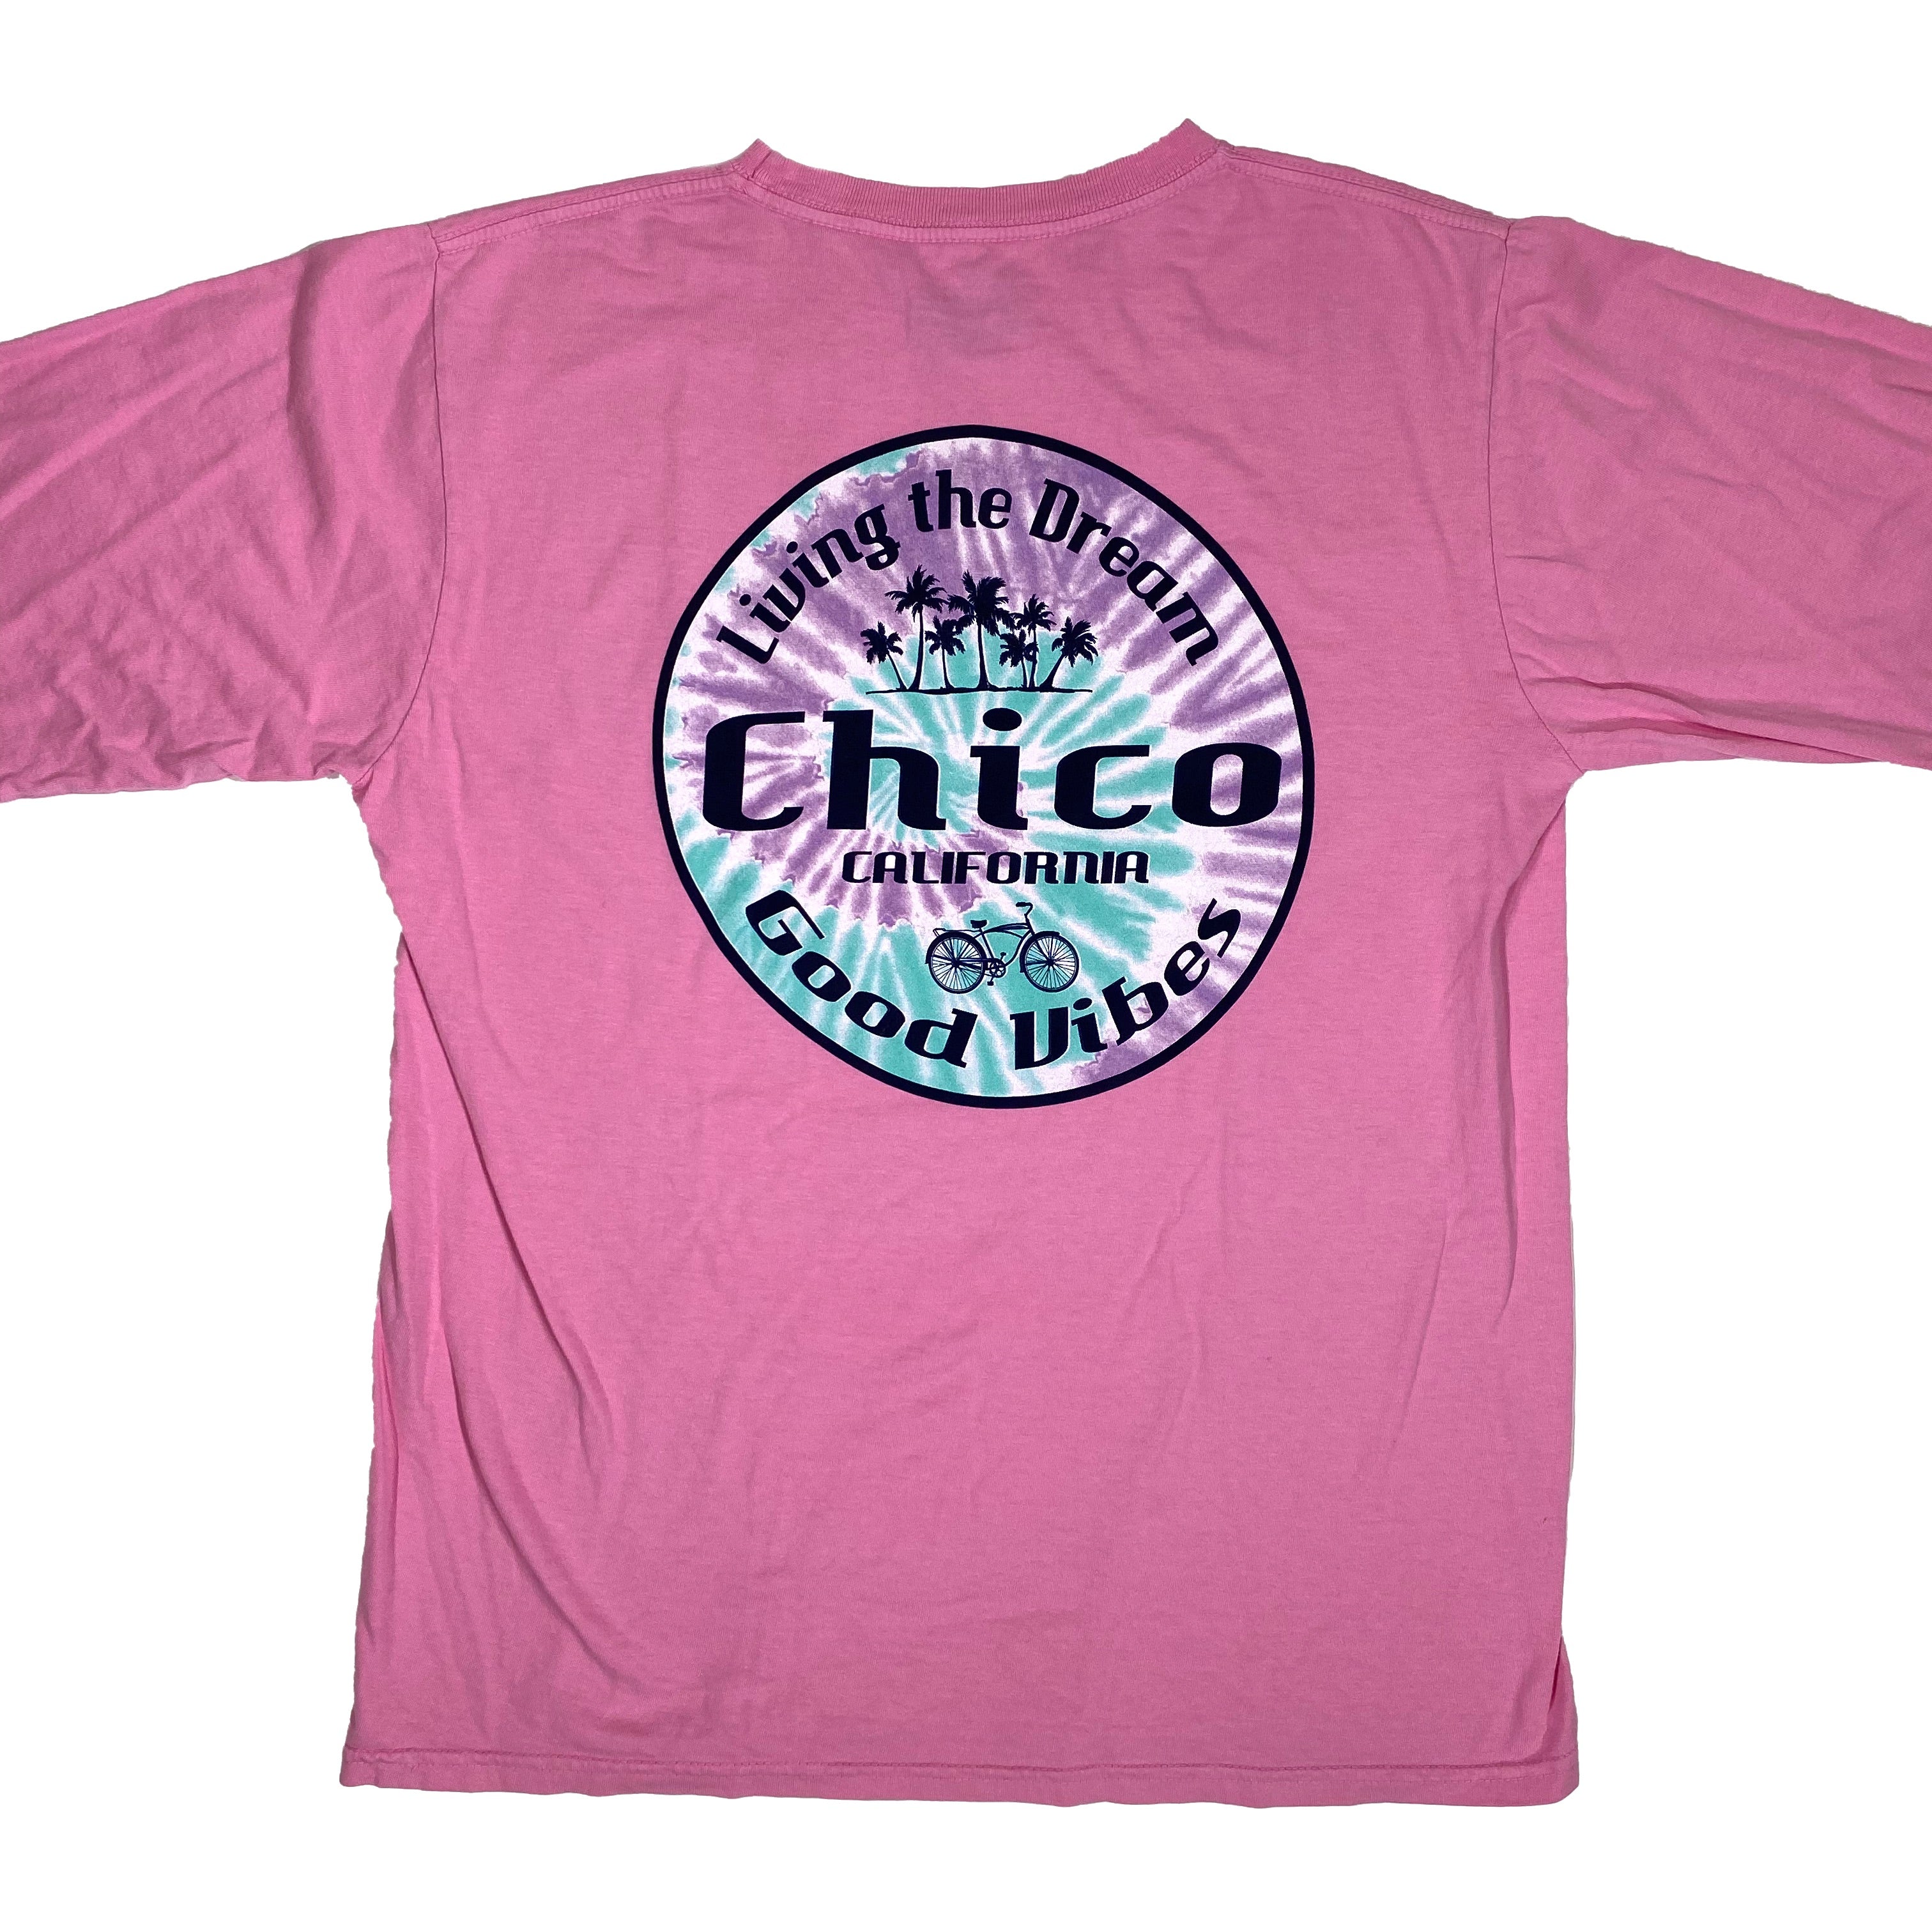 Halogen Mint Swirl - Long Sleeve Chico T-Shirt HOT PINK S  BIH71051